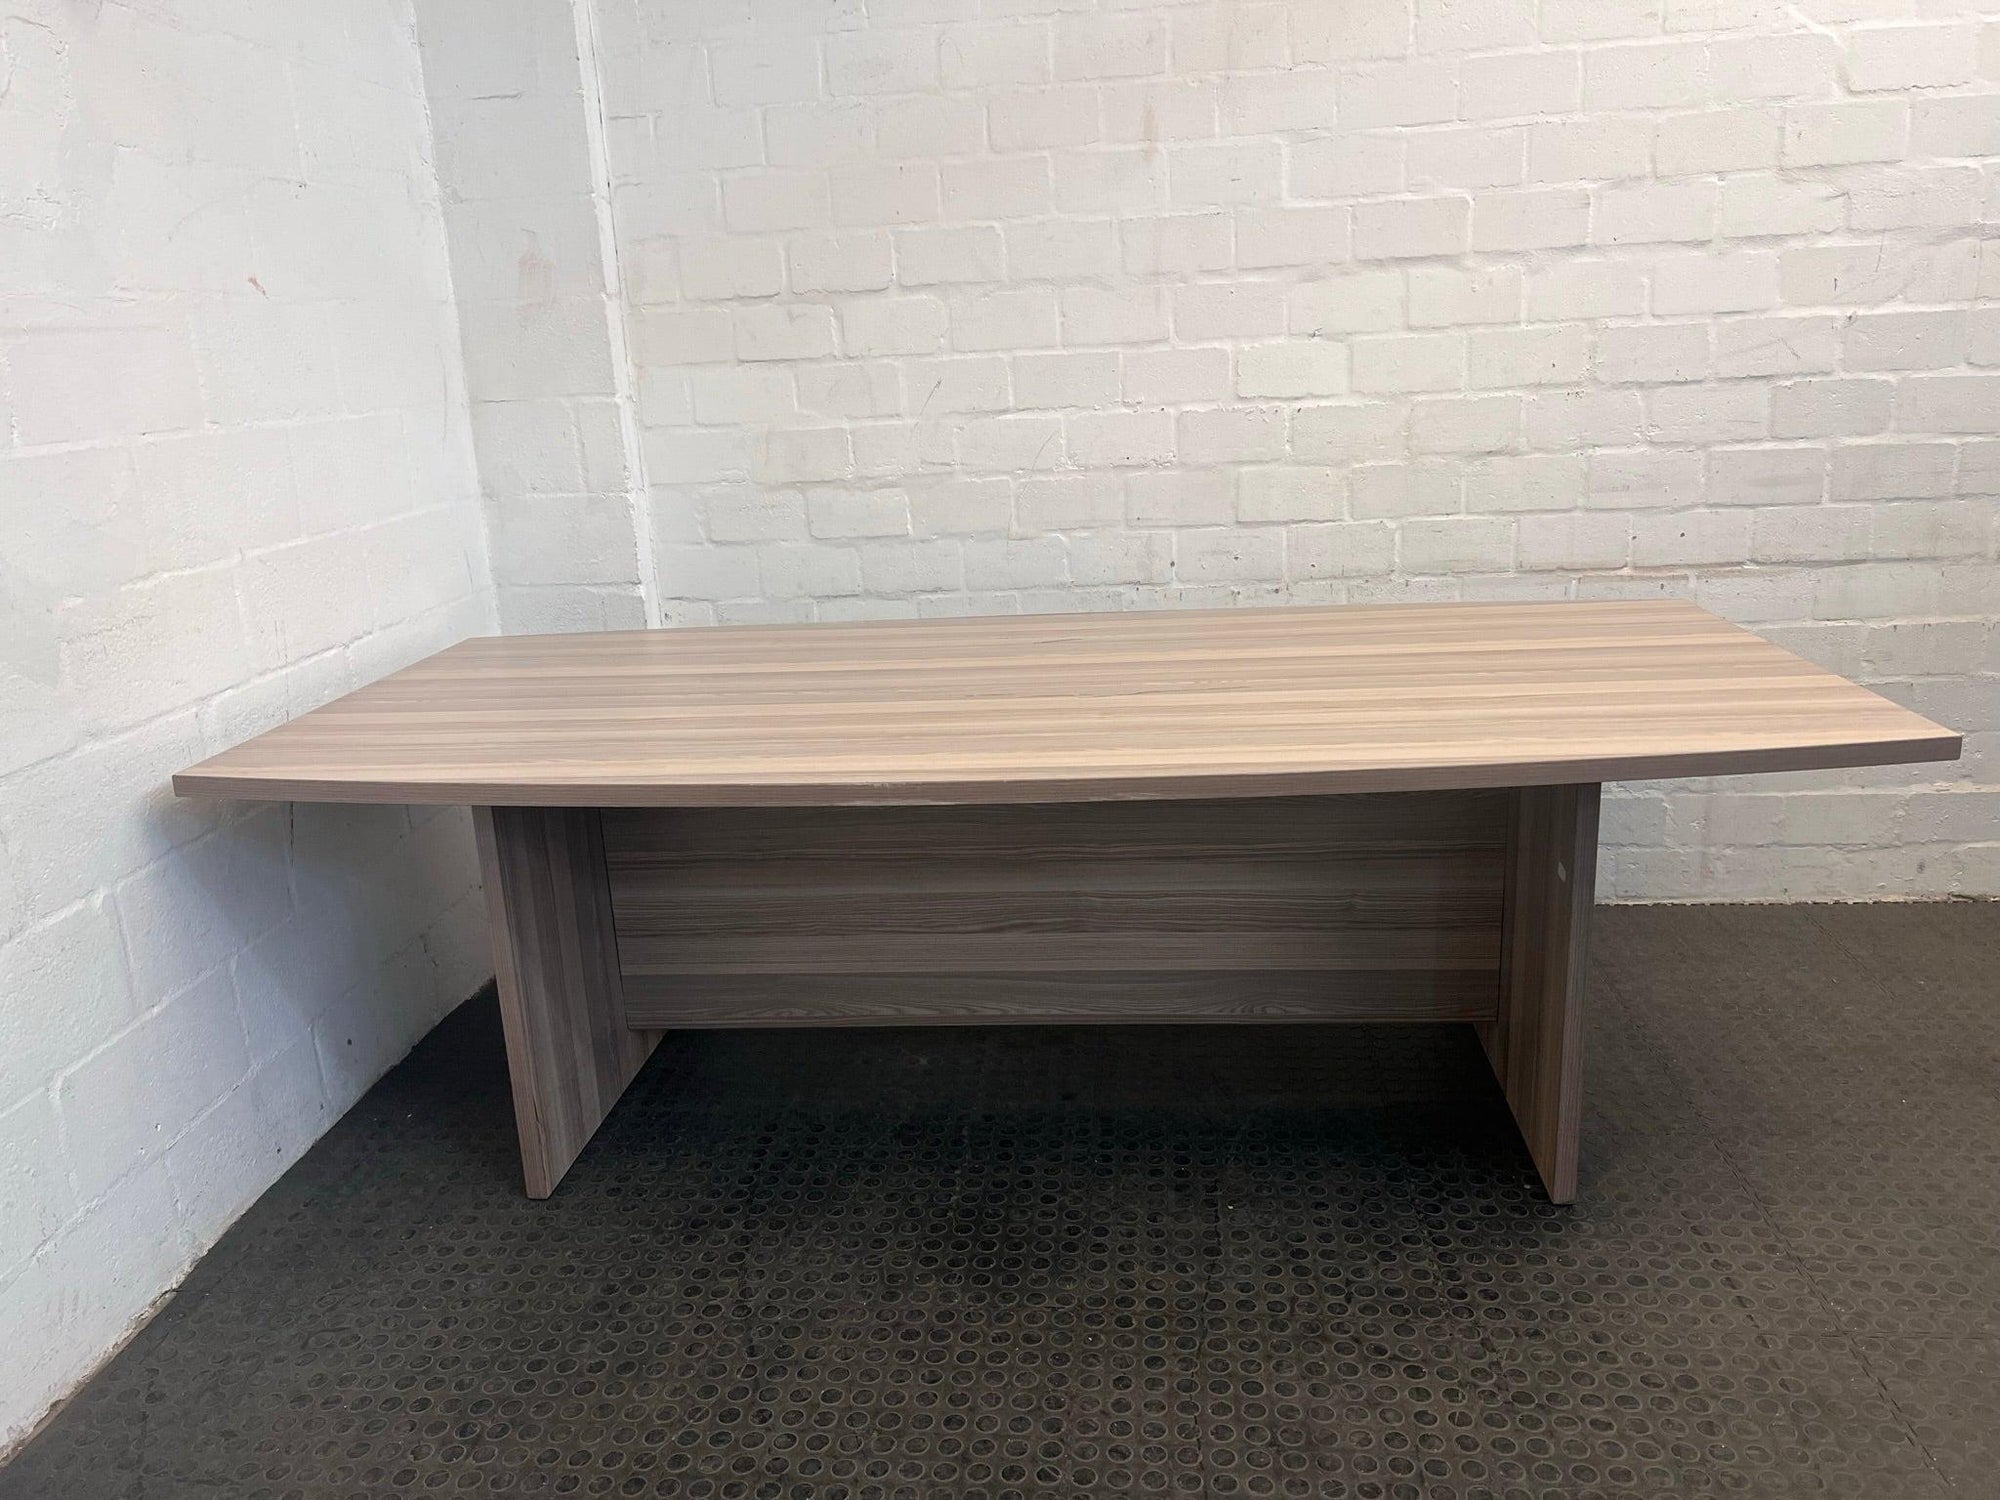 Grey Wood Print Boardroom Table - REDUCED